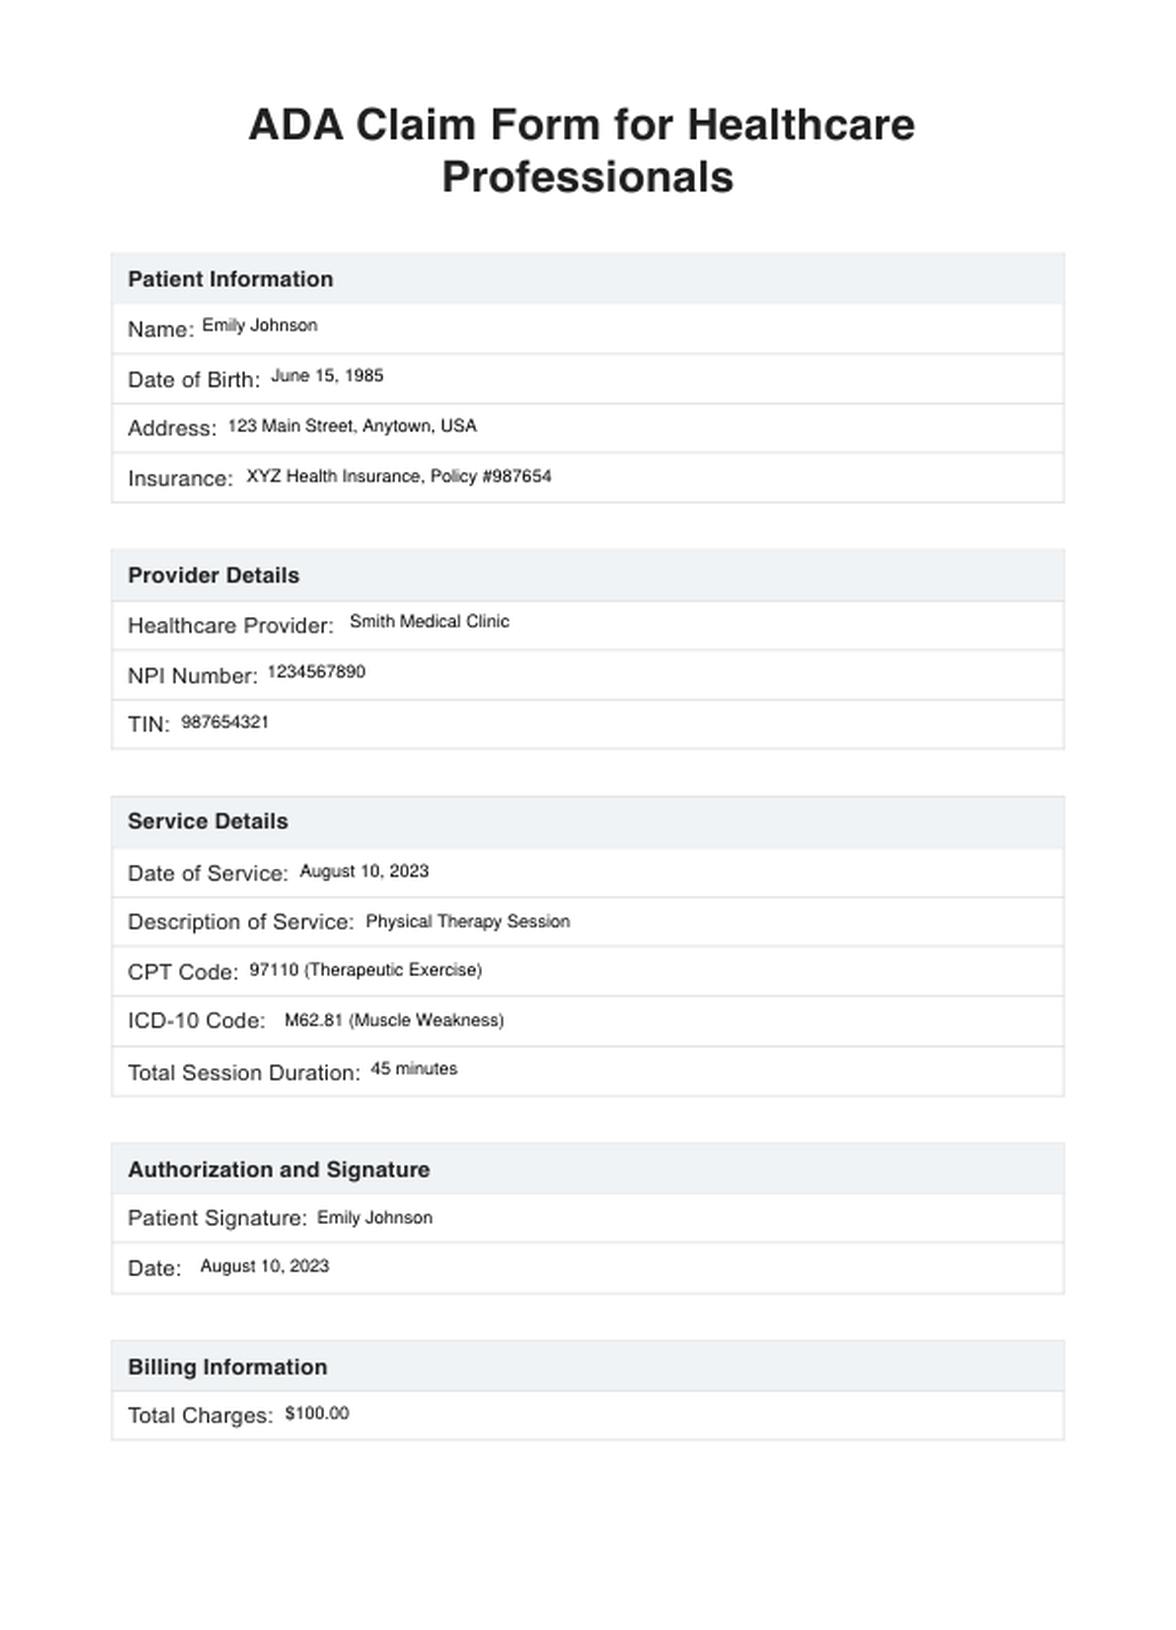 ADA Claim Forms PDF Example